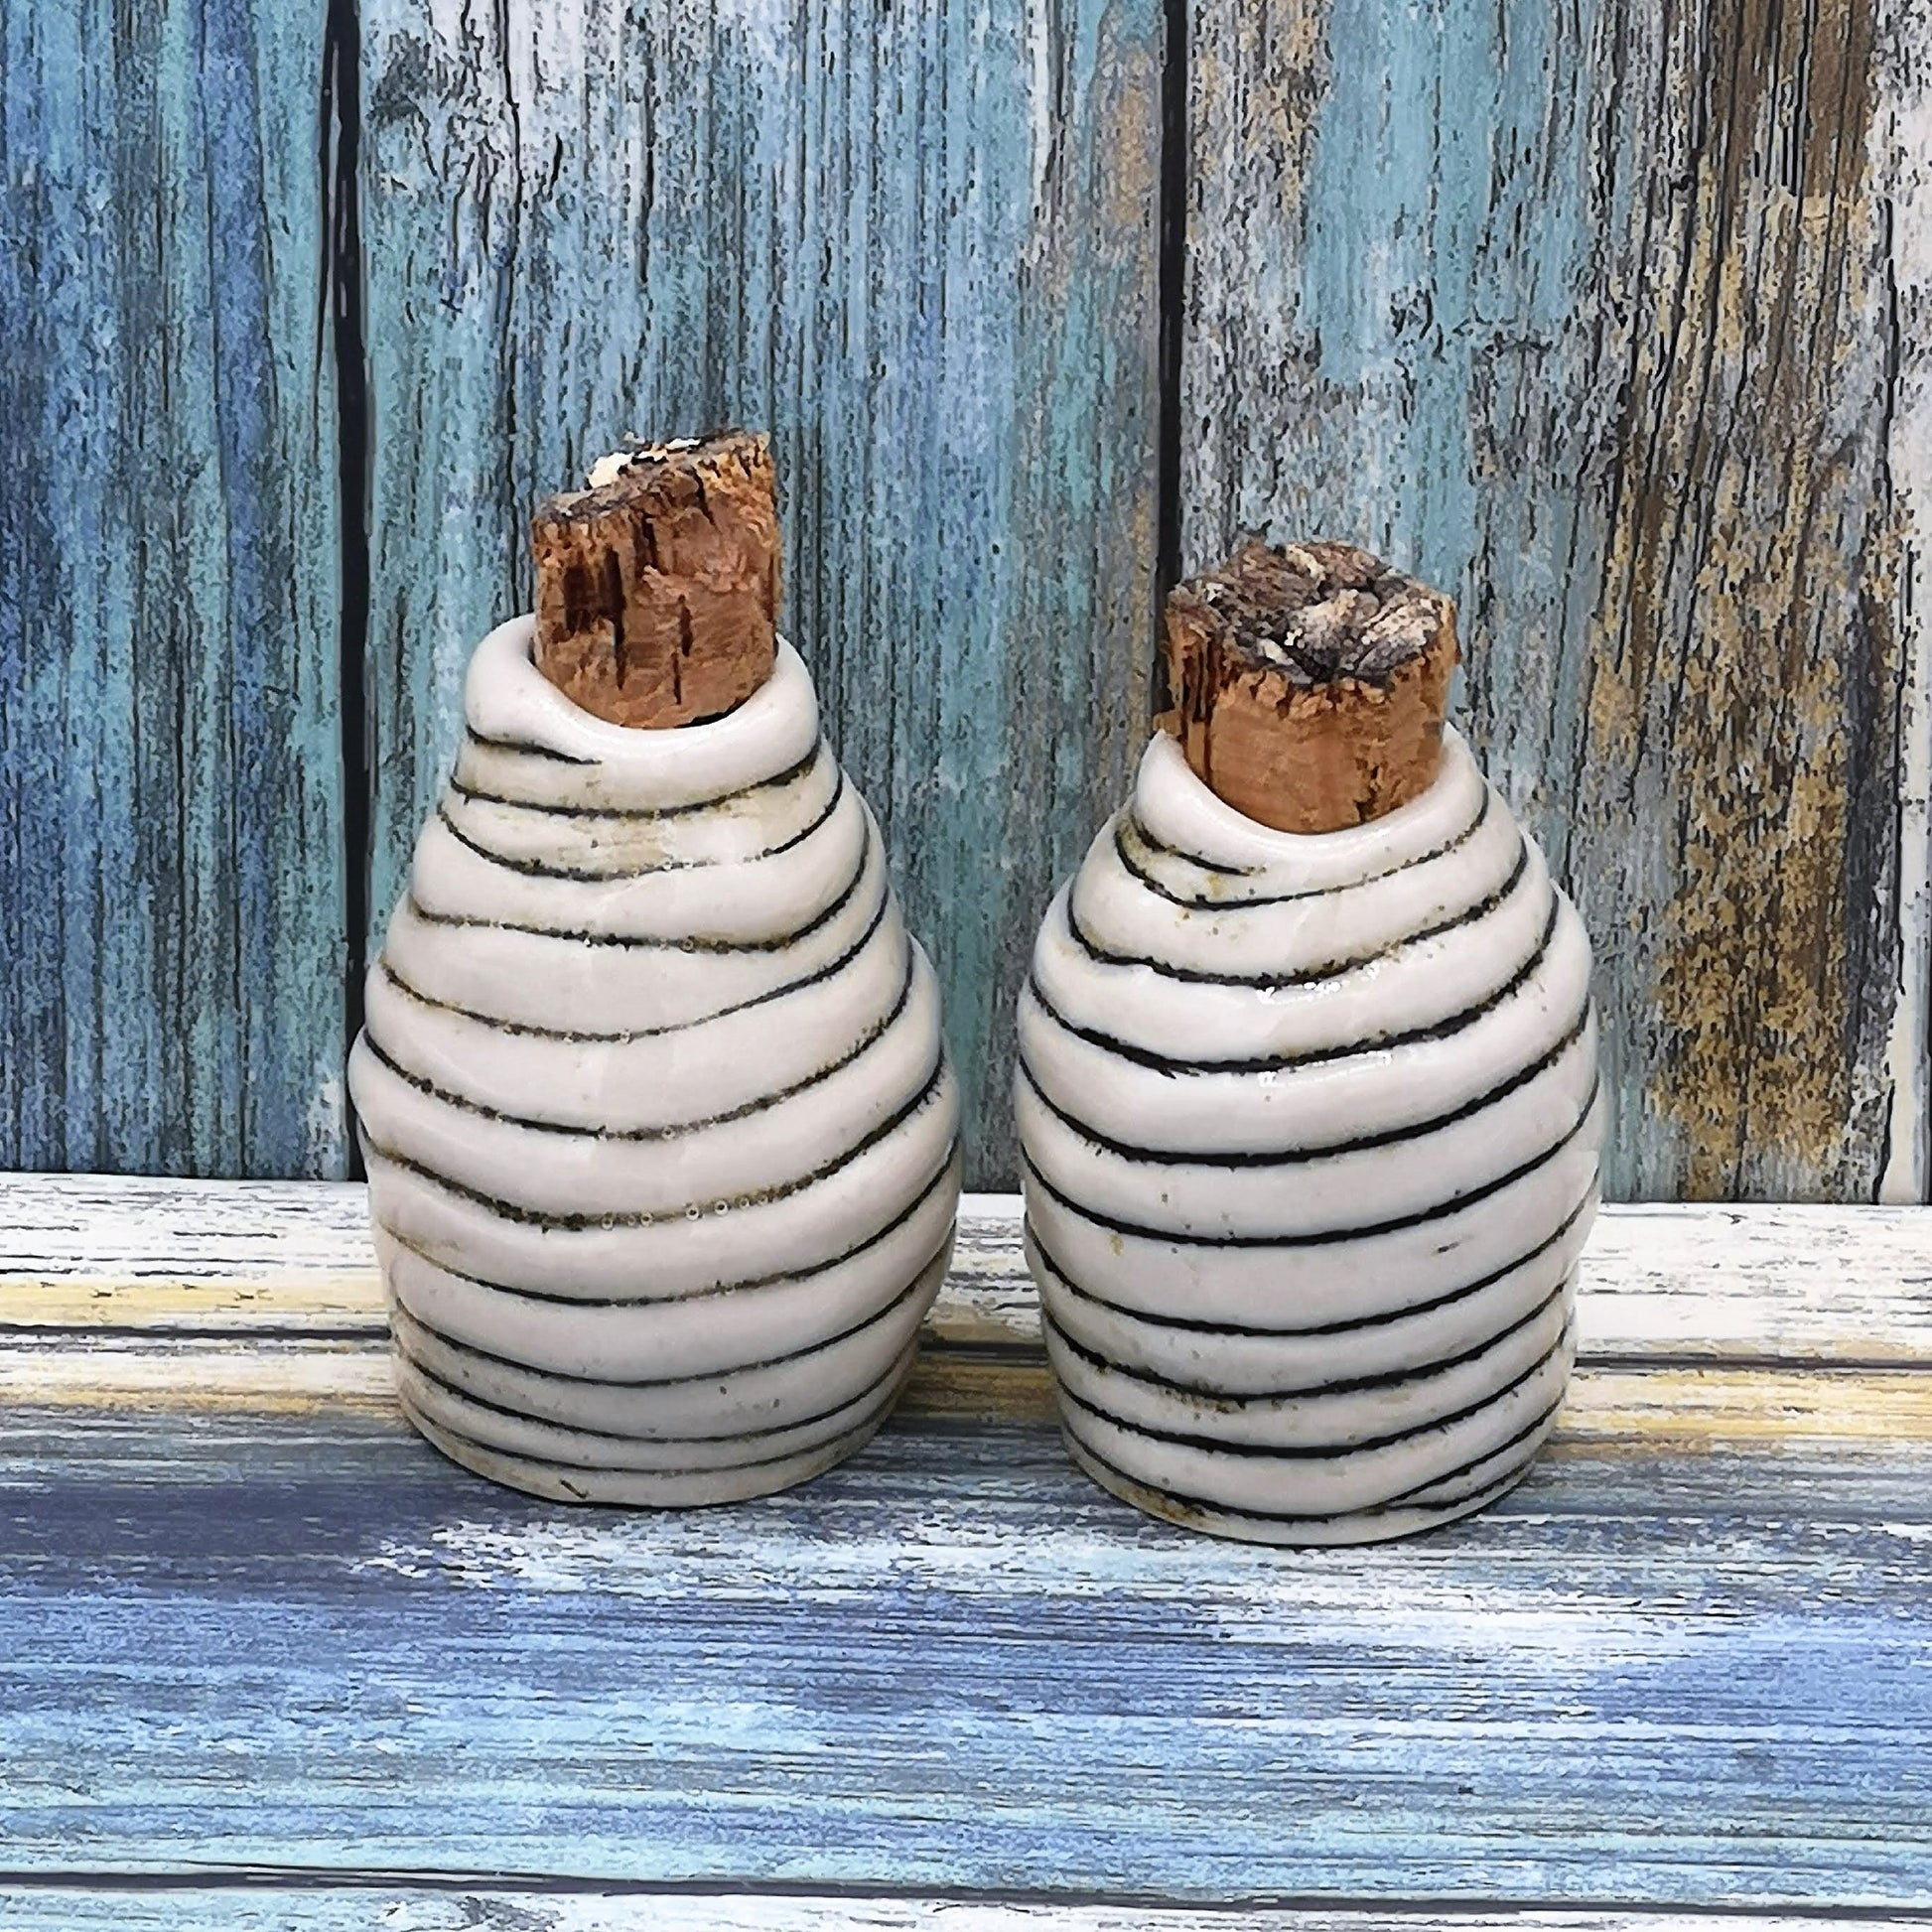 MINIATURE BOTTLE, SMALL Ceramic Bottle With Cork Stopper, Mini Bottles, Handmade Pottery Vase, 9th anniversary gift for wife, mom birthday - Ceramica Ana Rafael